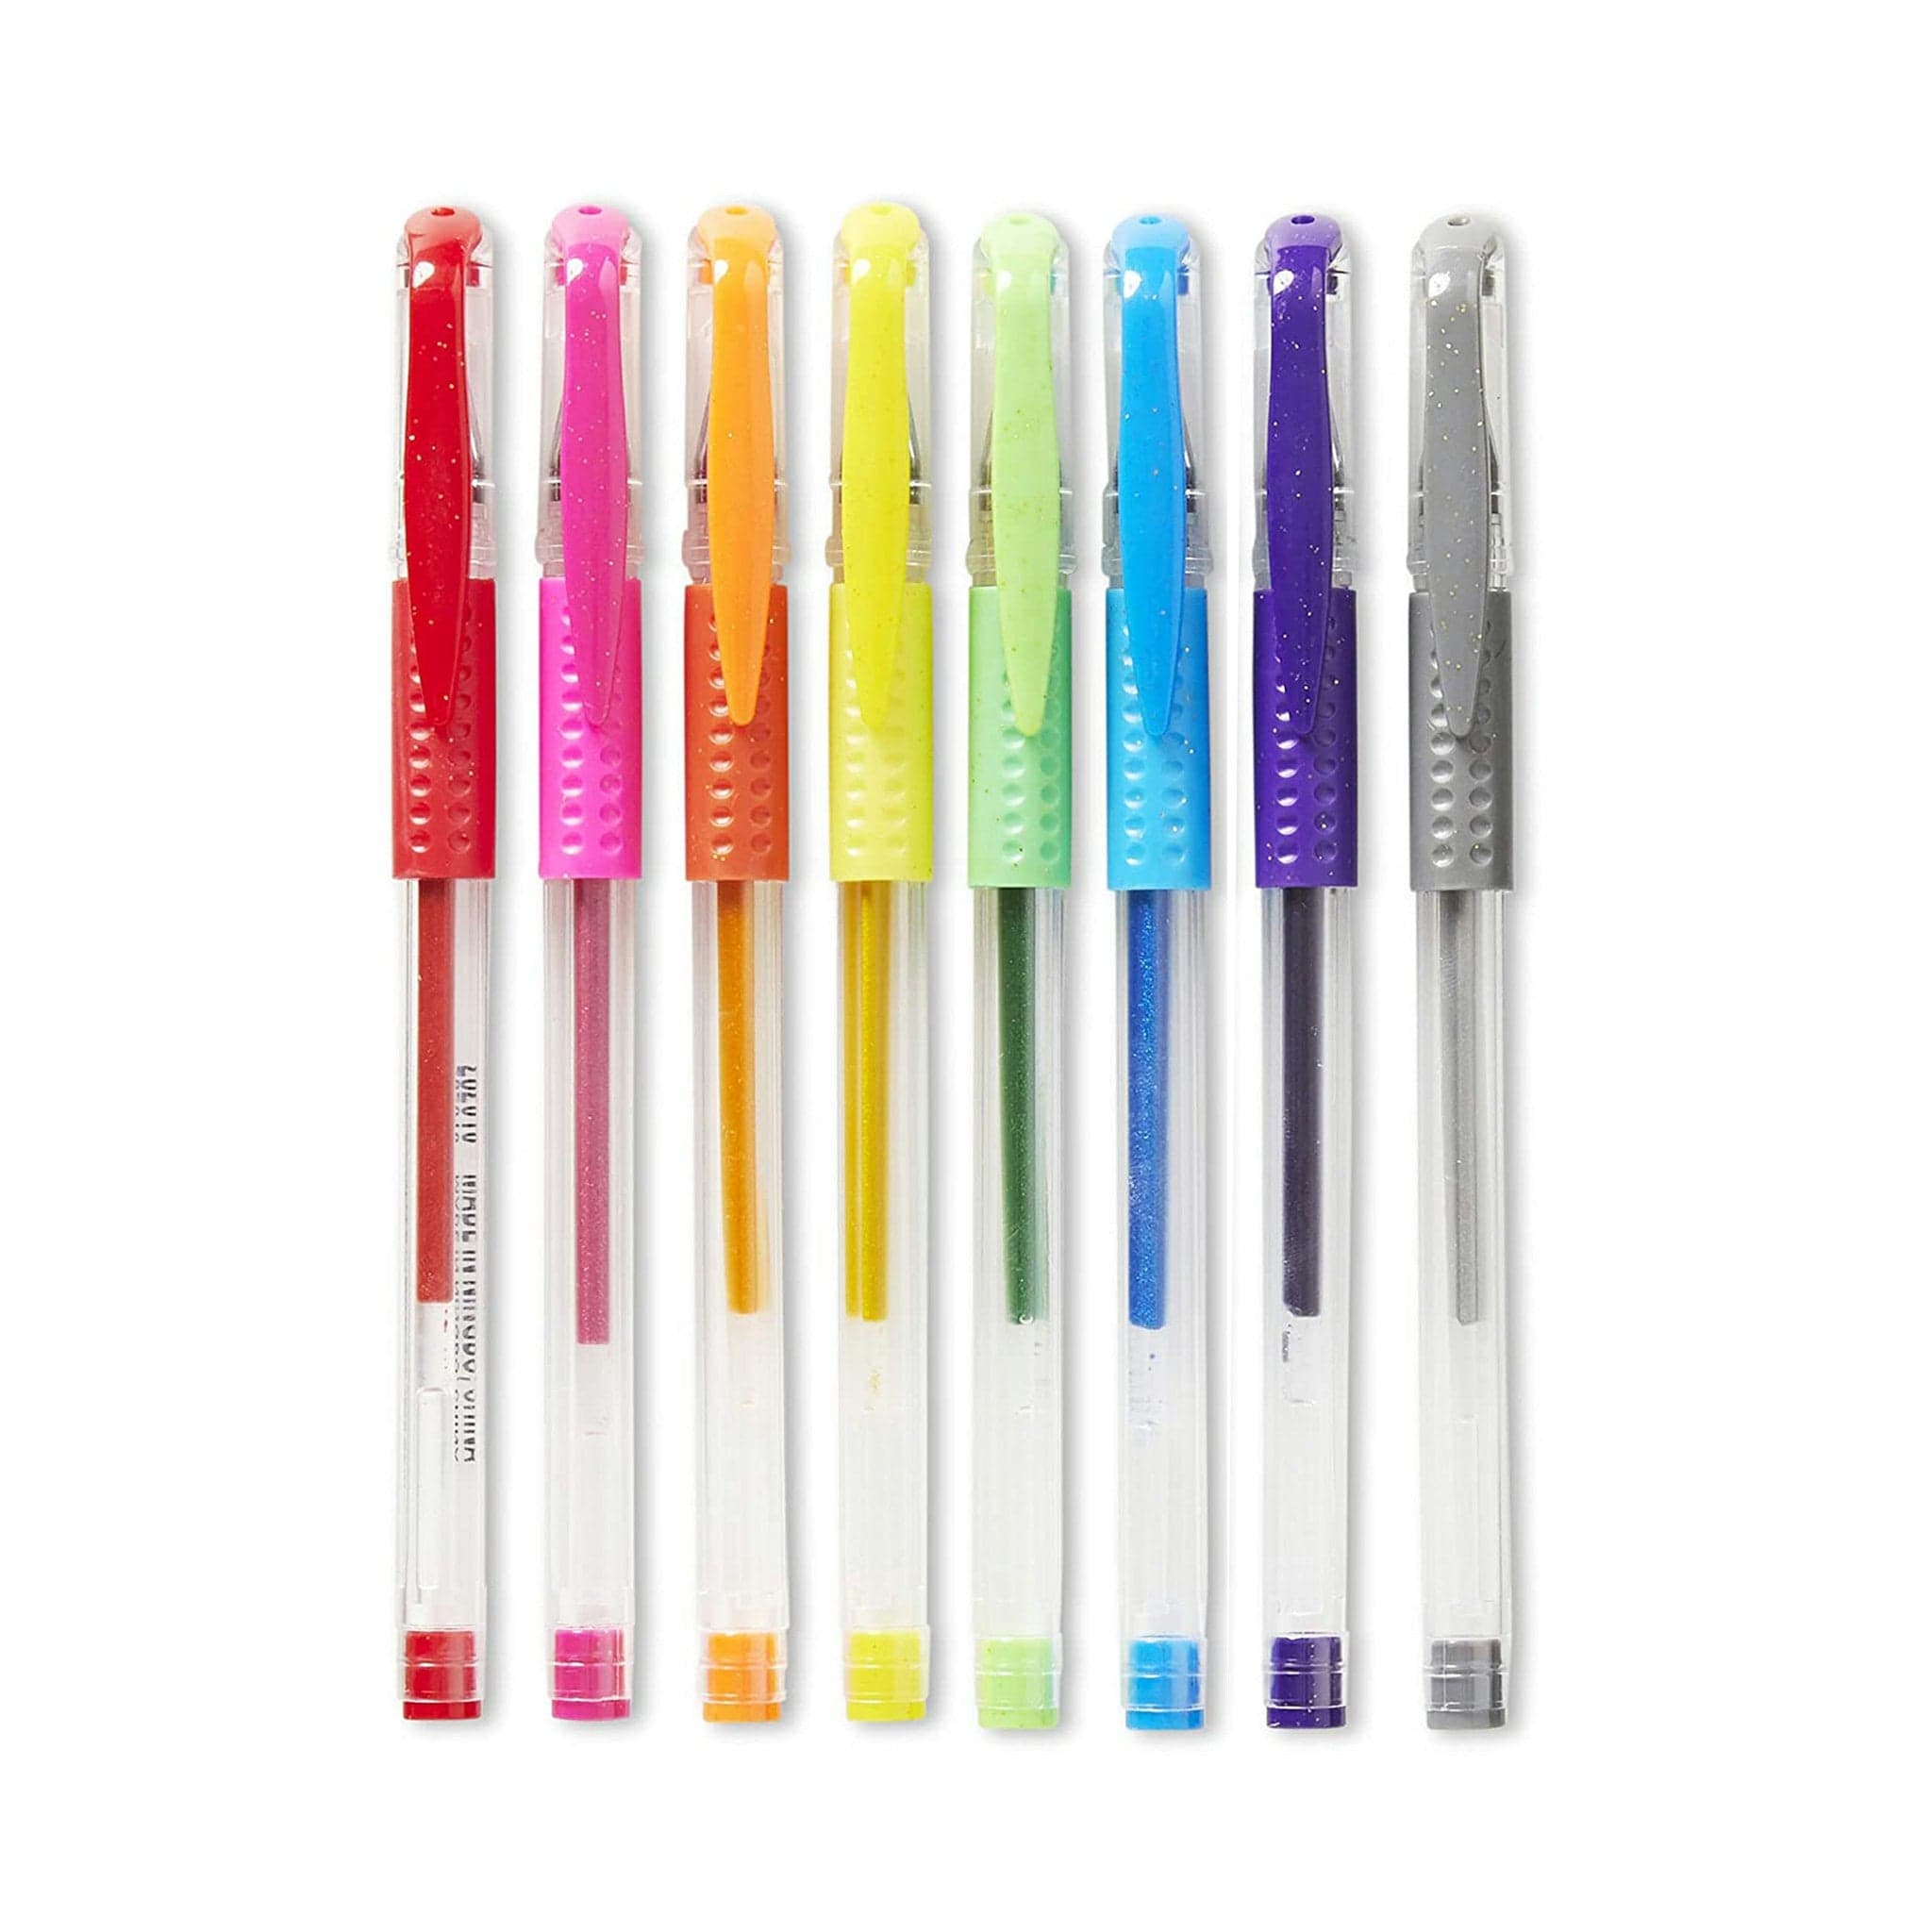 Scentos Sugar Rush  Gel pens, Gel pens coloring, Pen